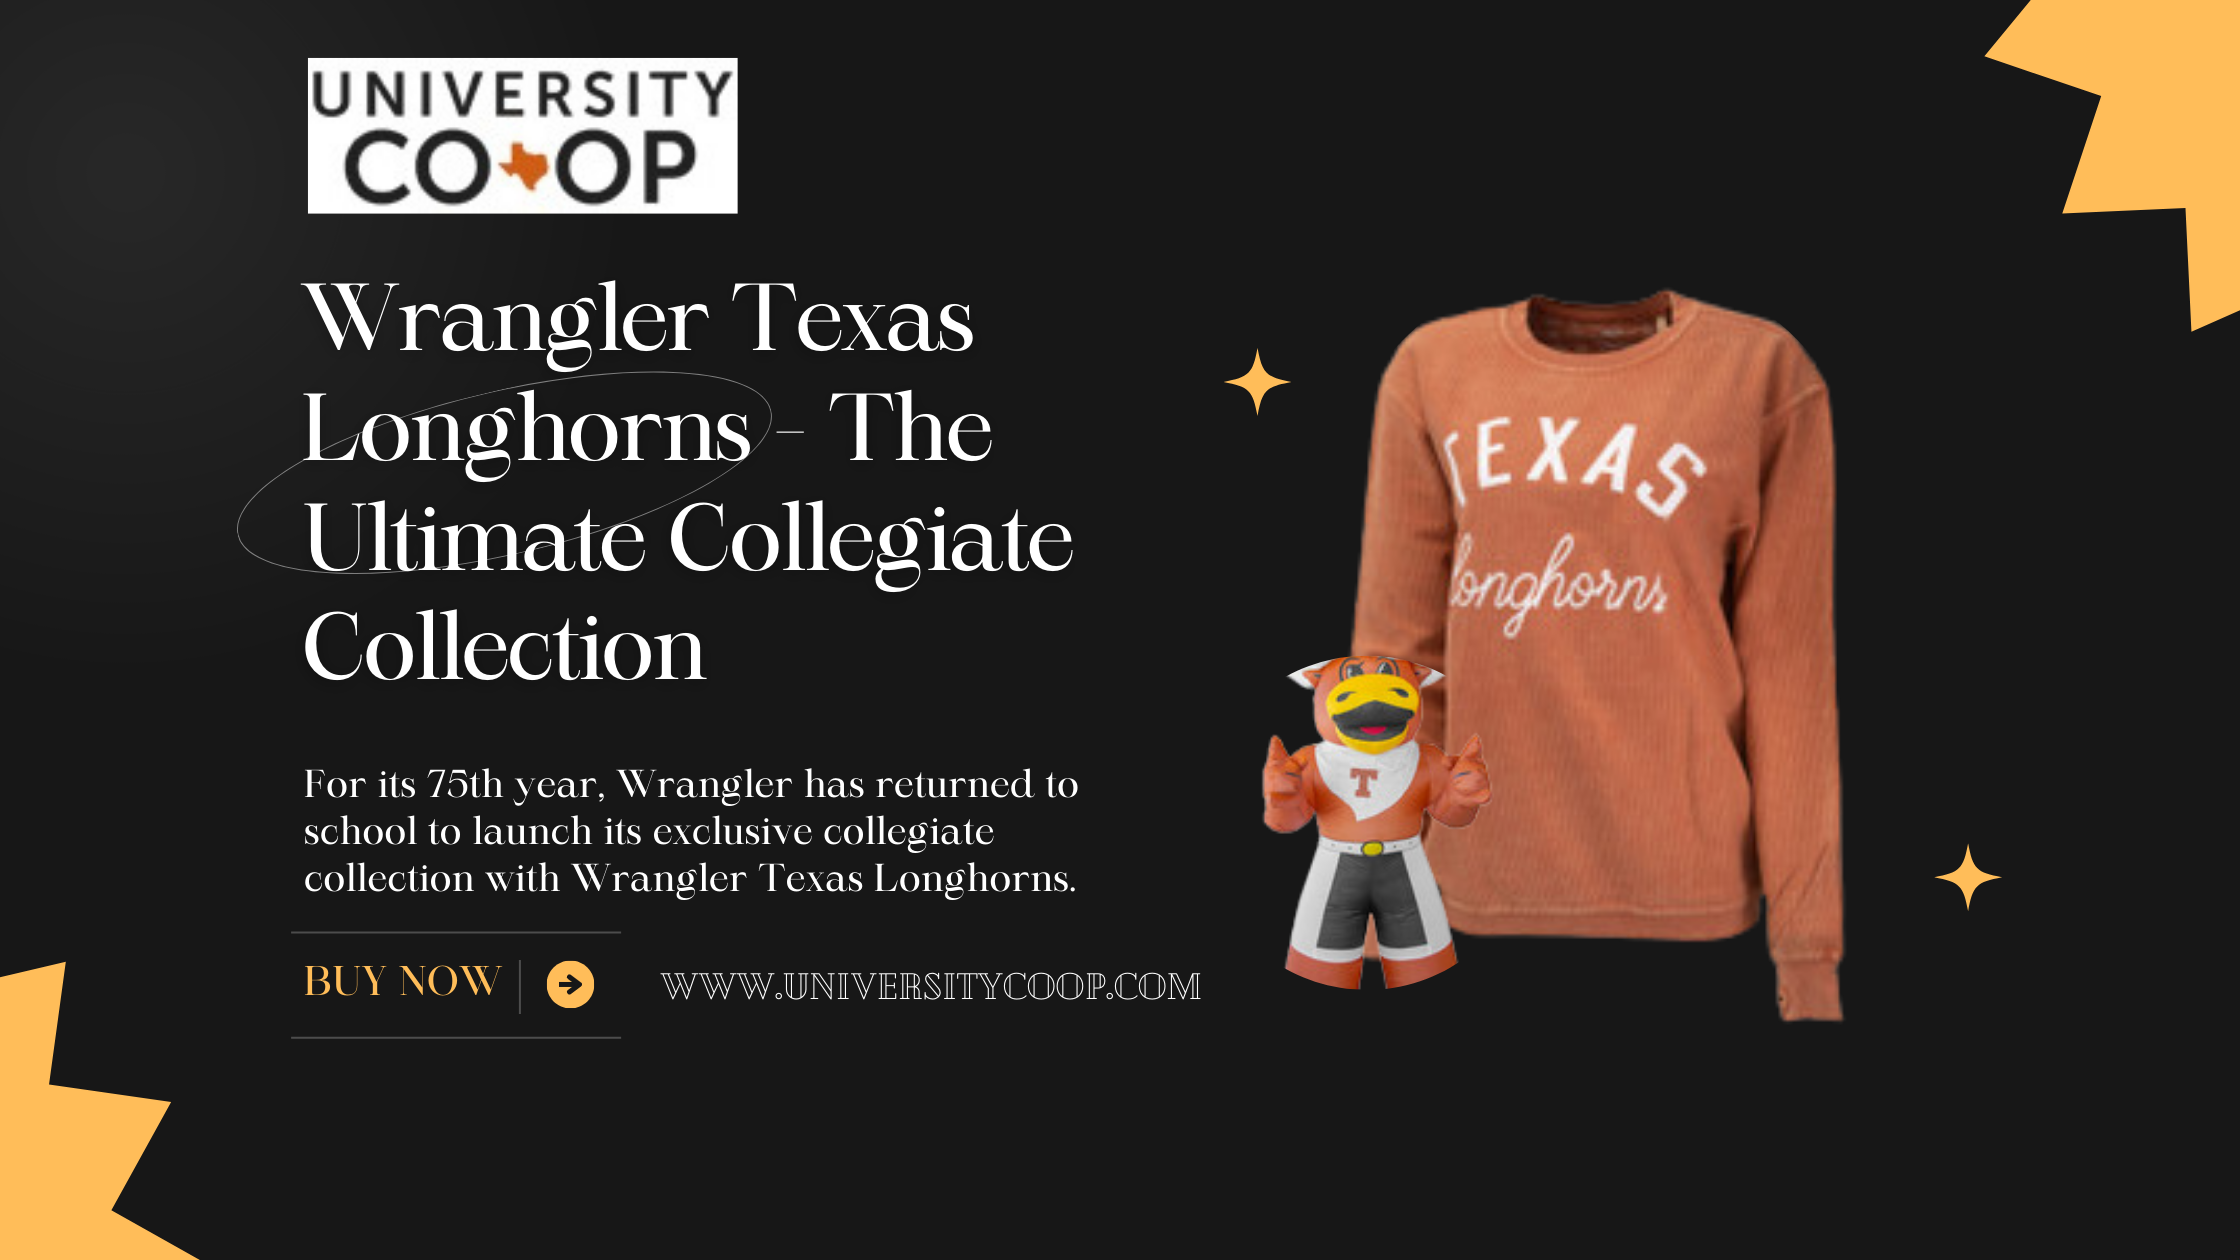 Wrangler Texas Longhorns - the Ultimate Collegiate Collection